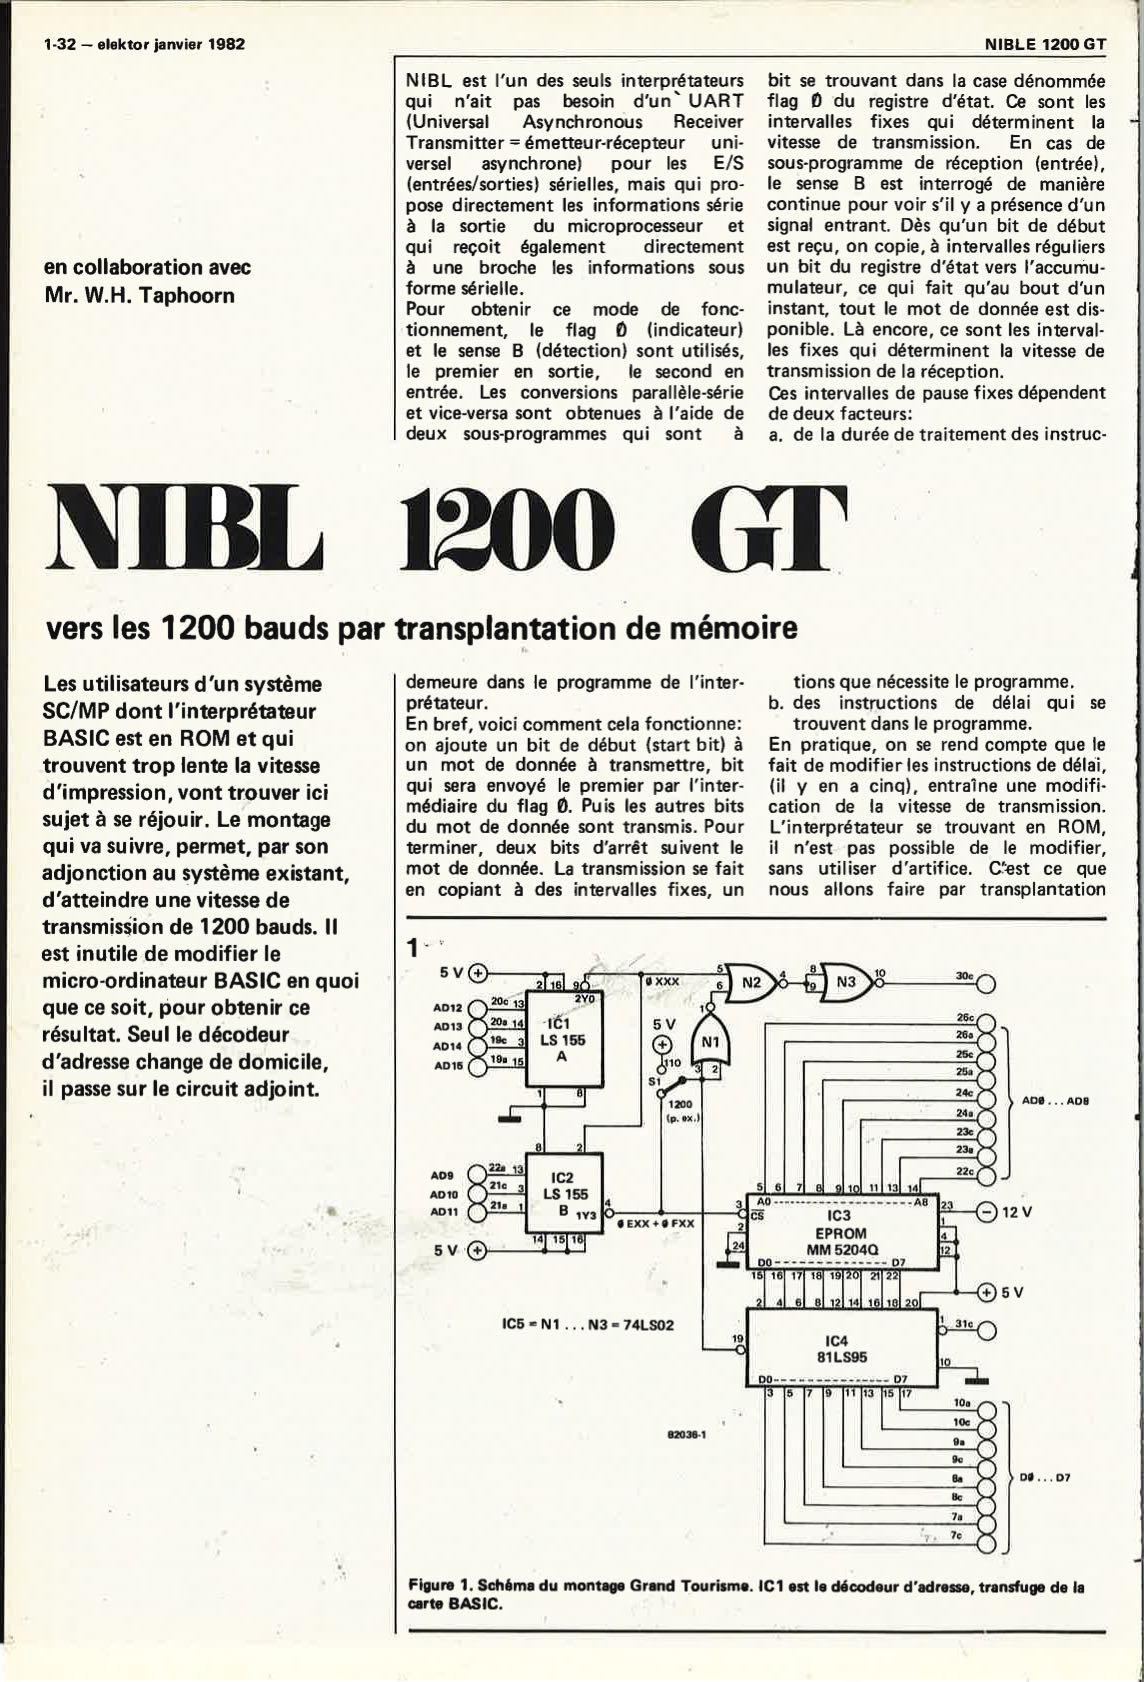 NIBL 1200 GT